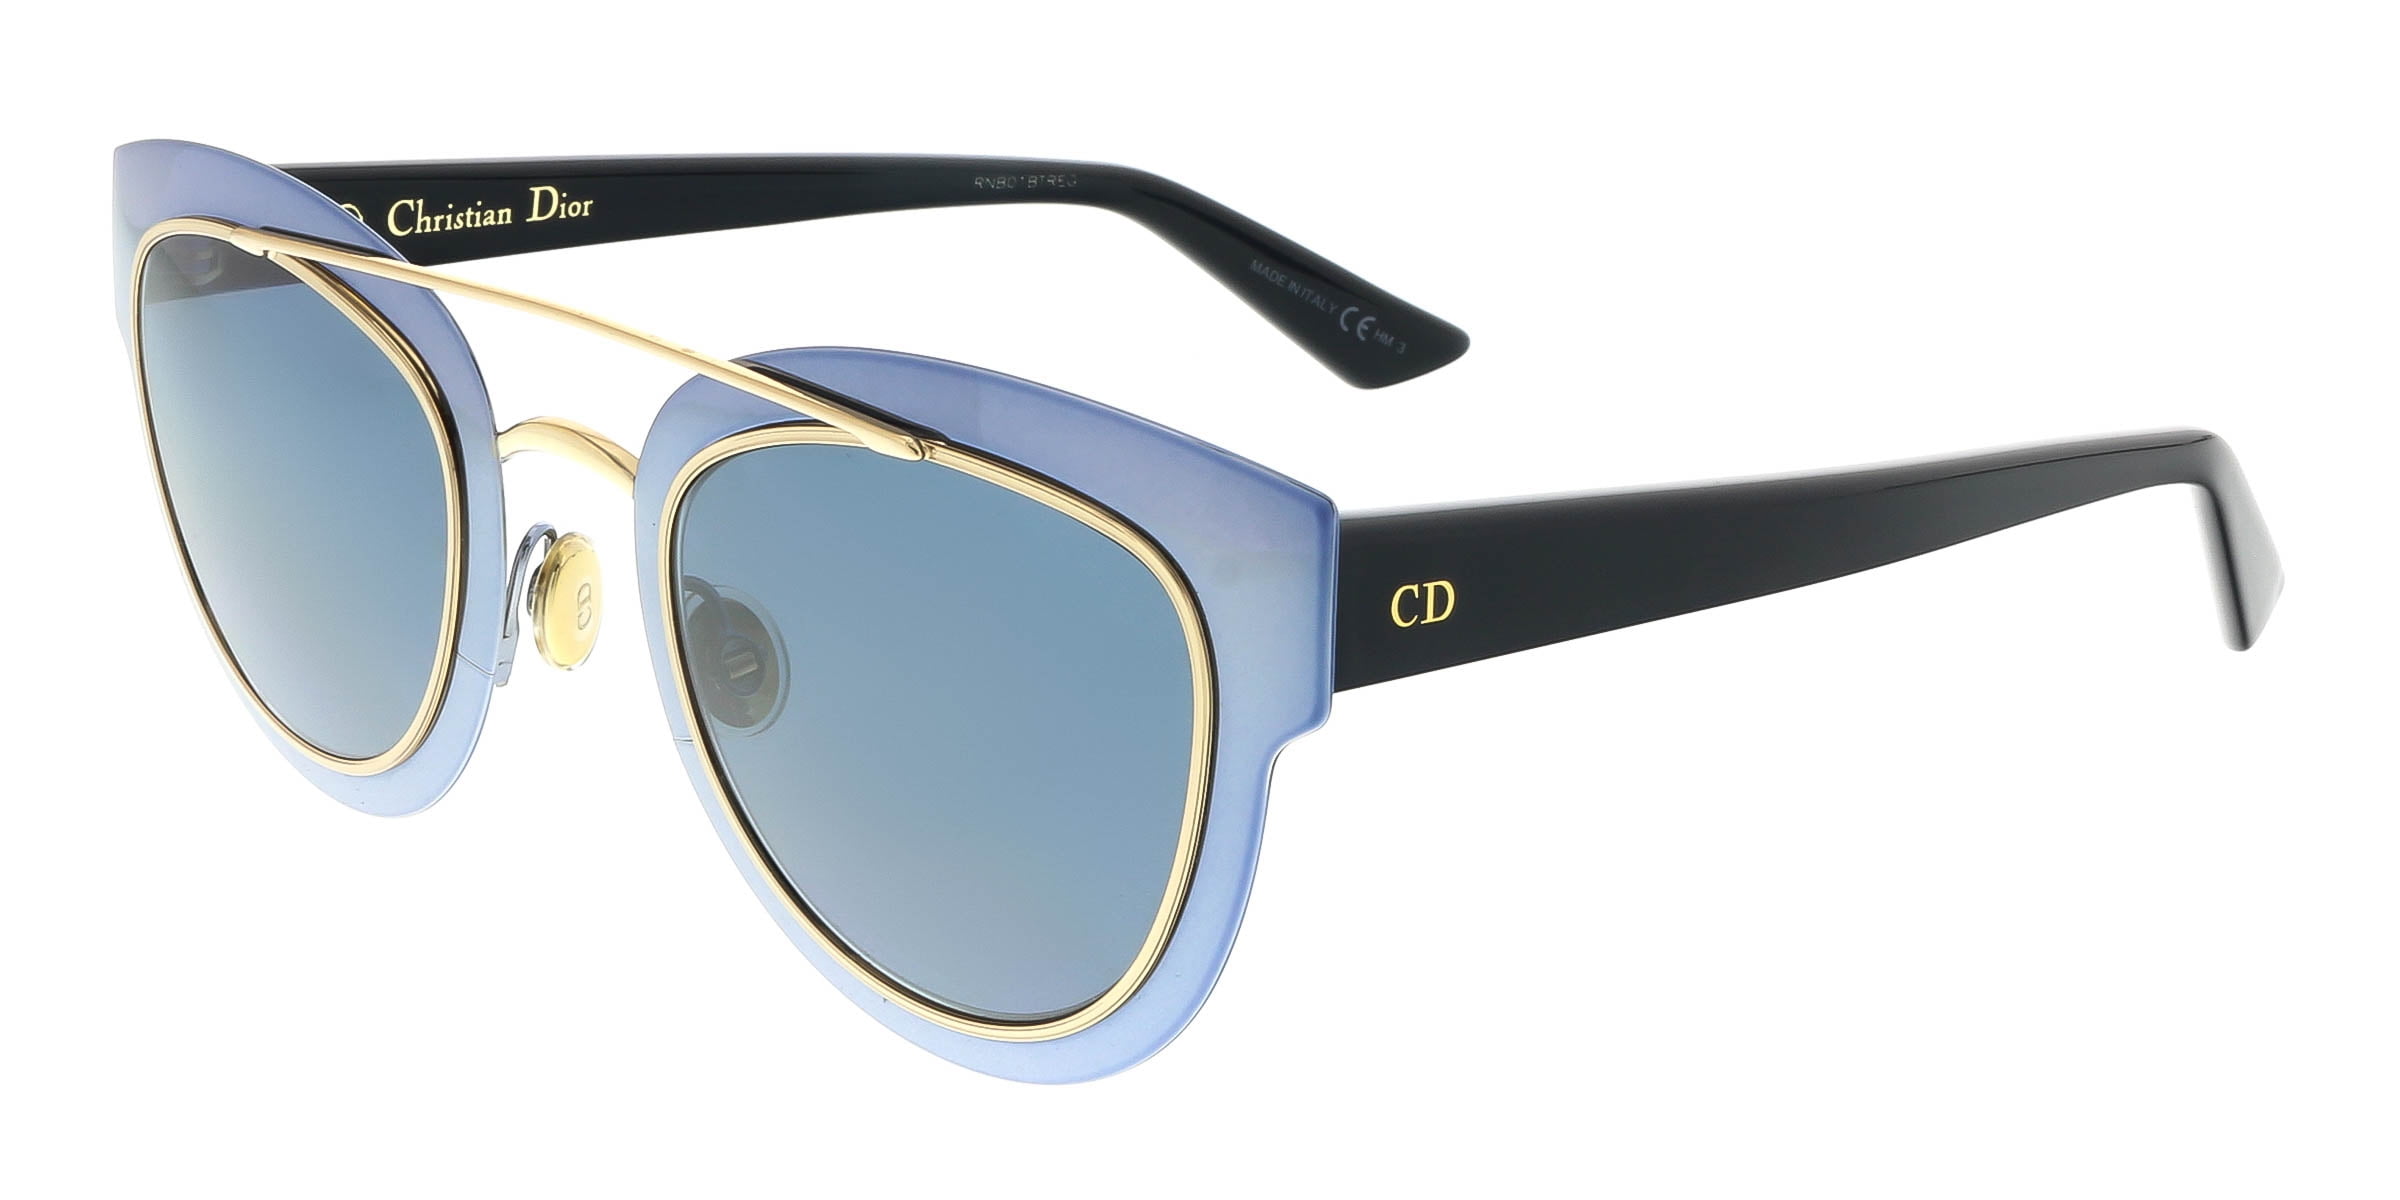 dior chromic sunglasses